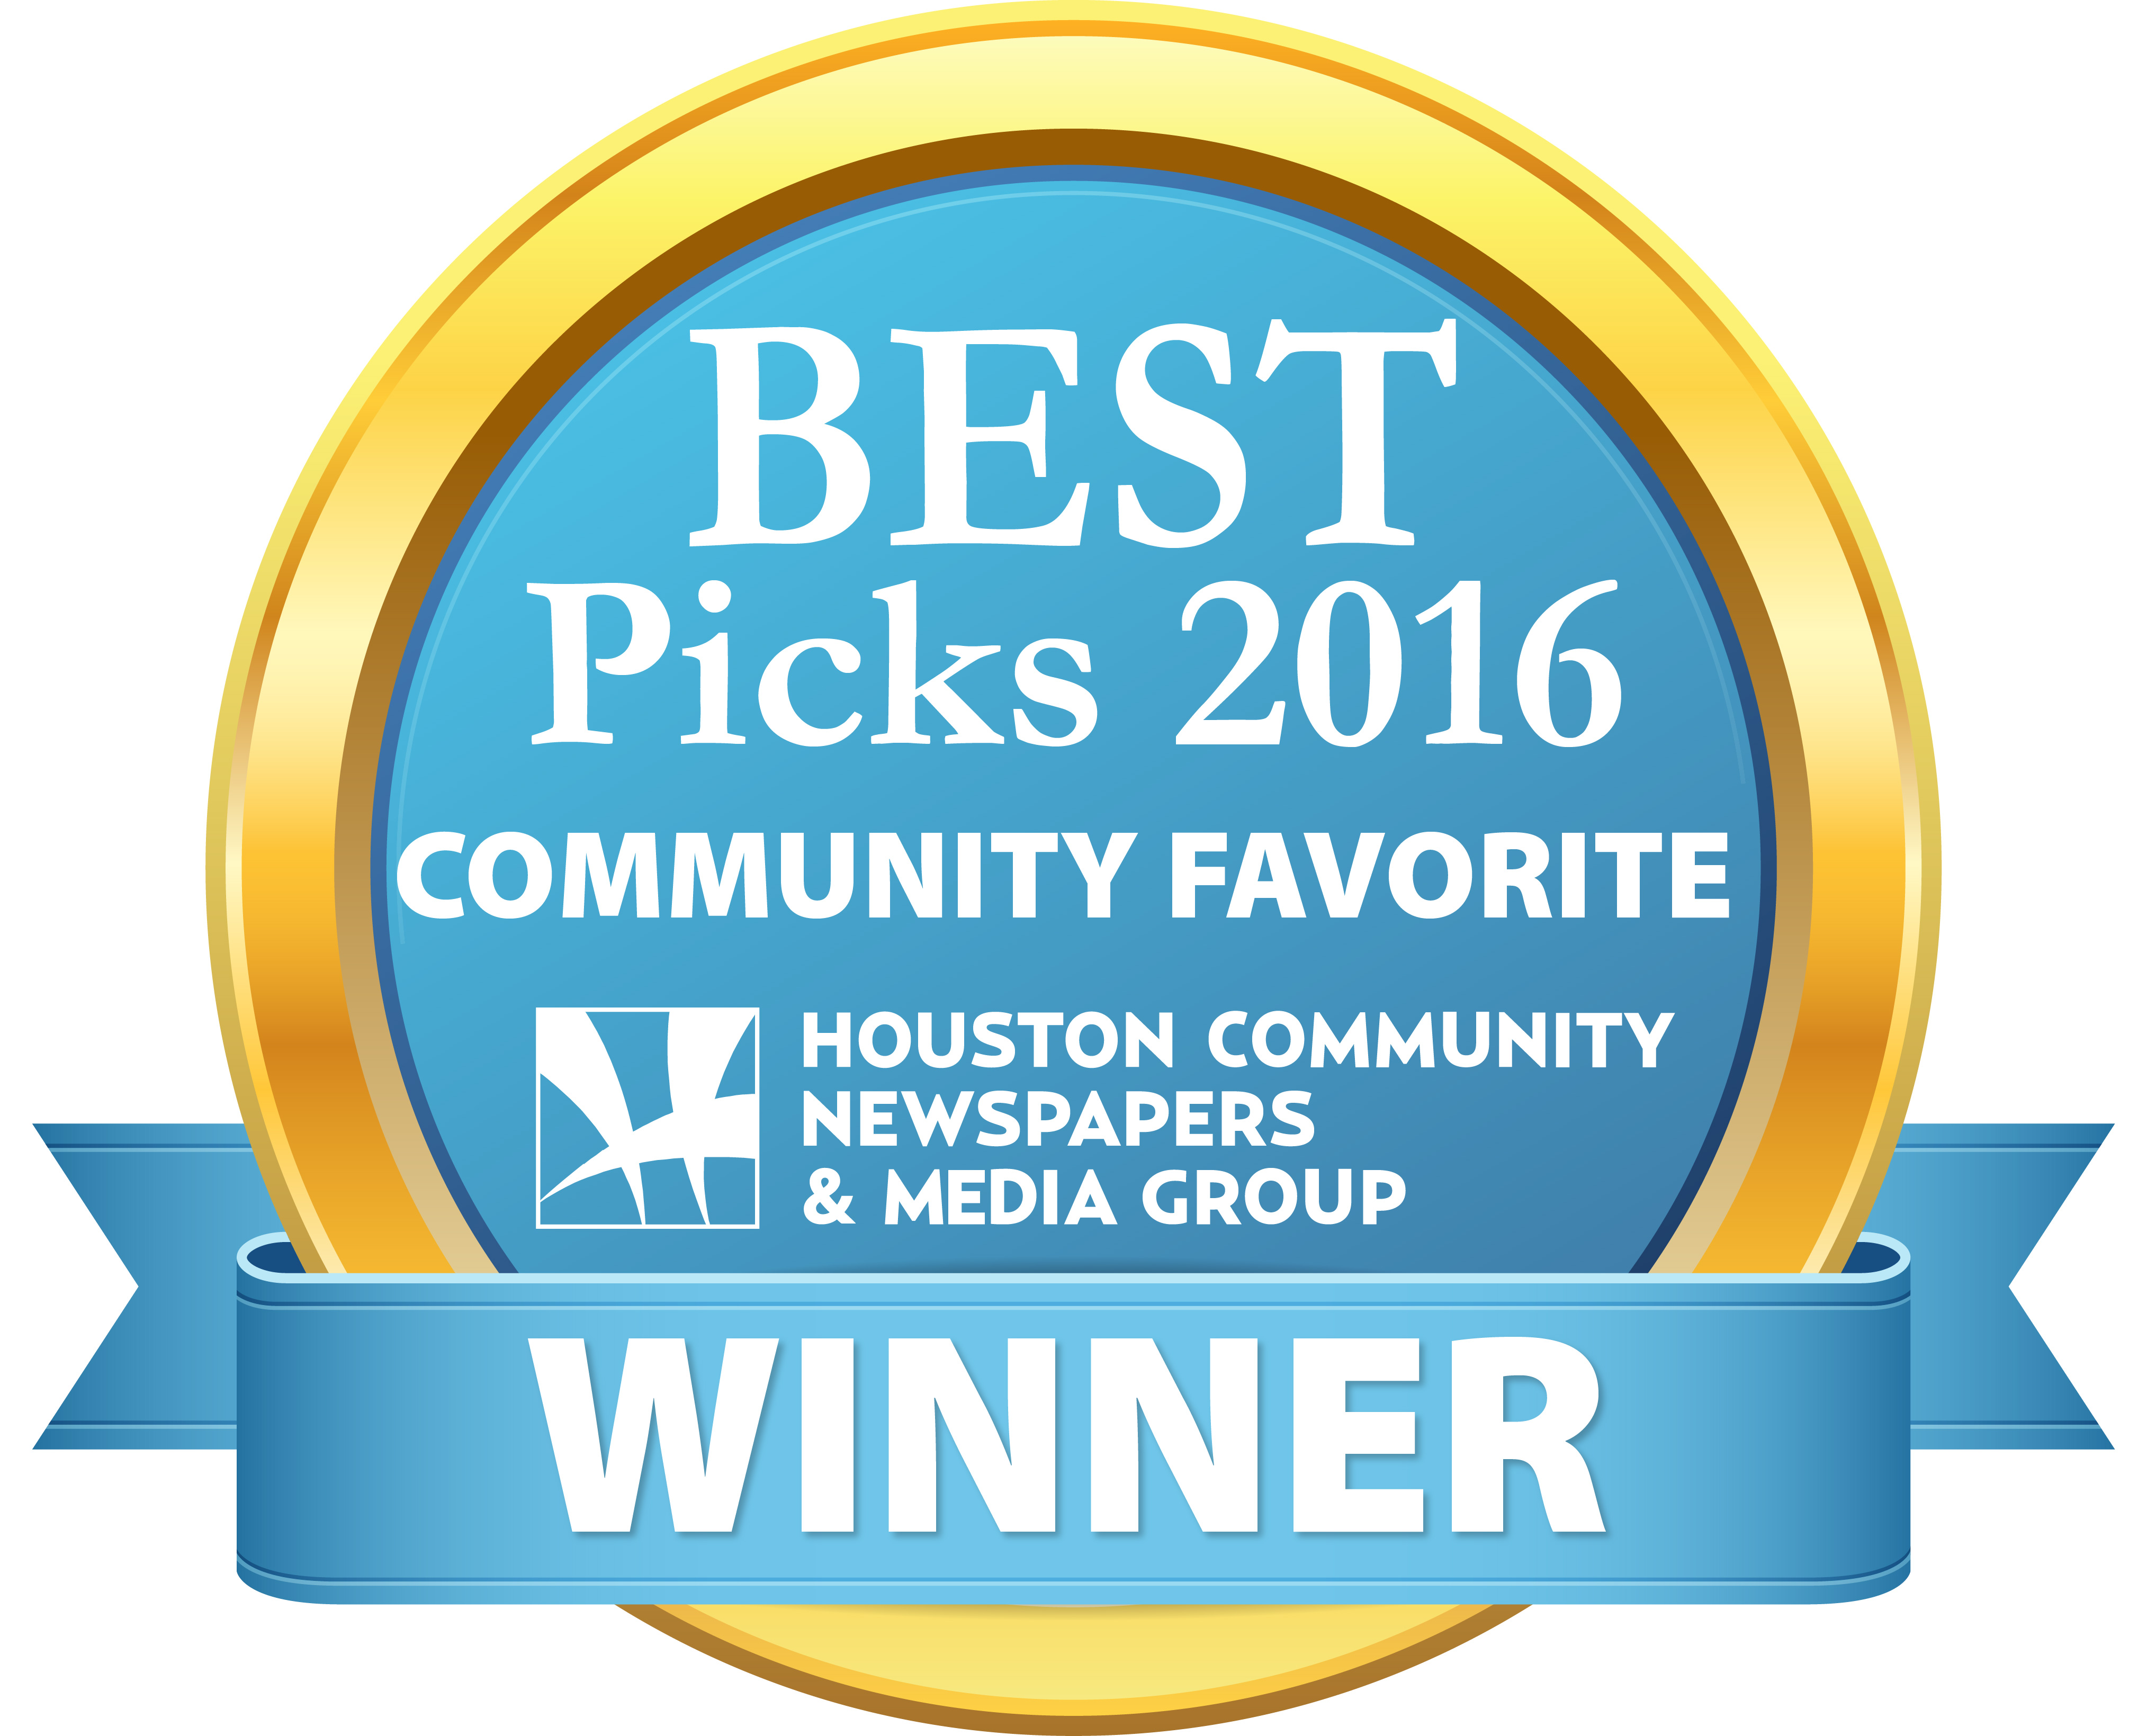 Best Picks 2016 Community Favorite